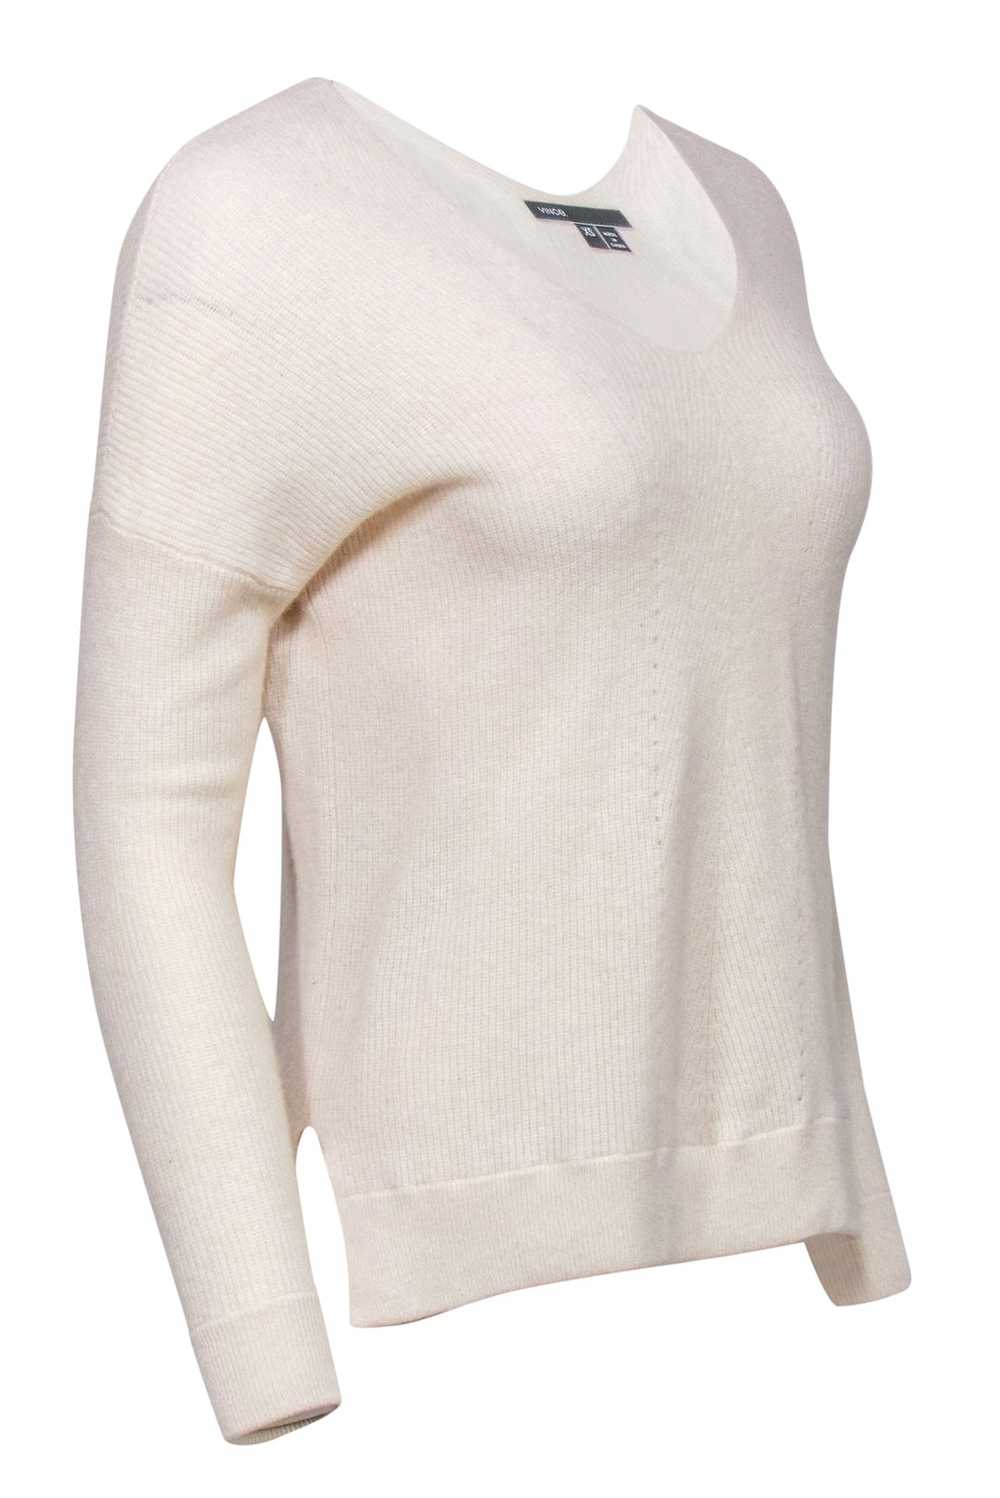 Vince - Ivory Ribbed Cashmere Sweater w/ Eyelet T… - image 2